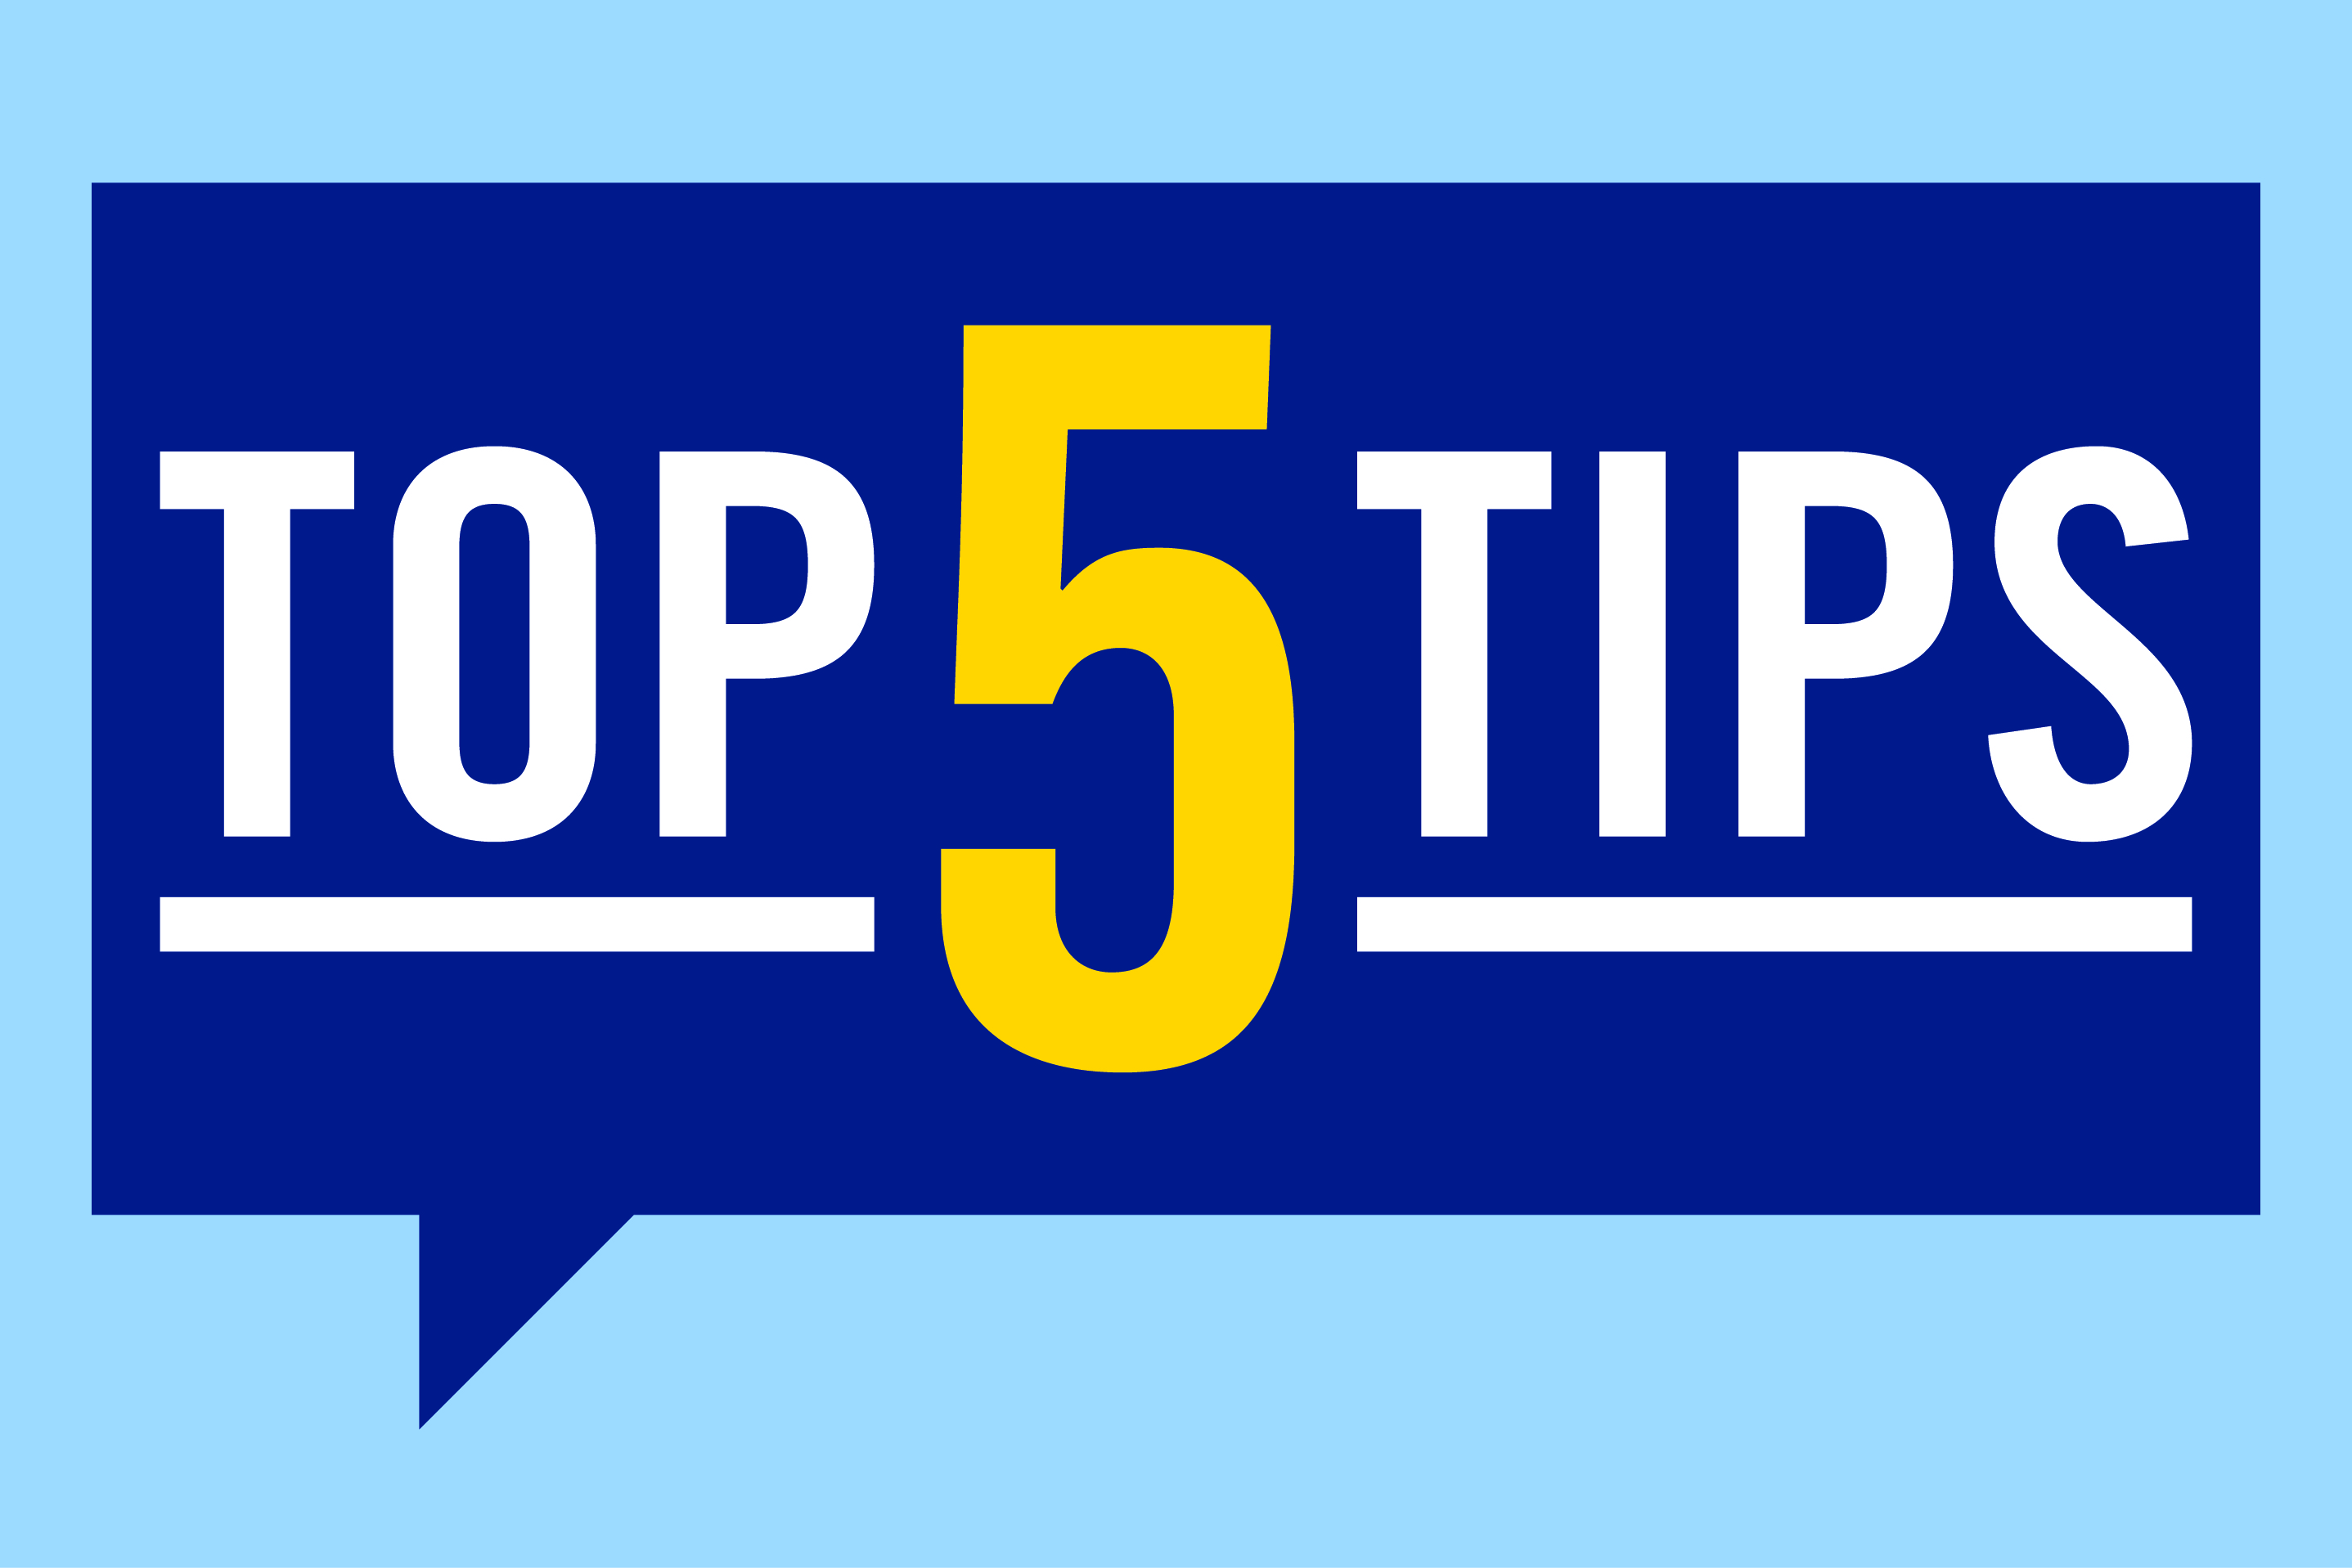 Top five tips image